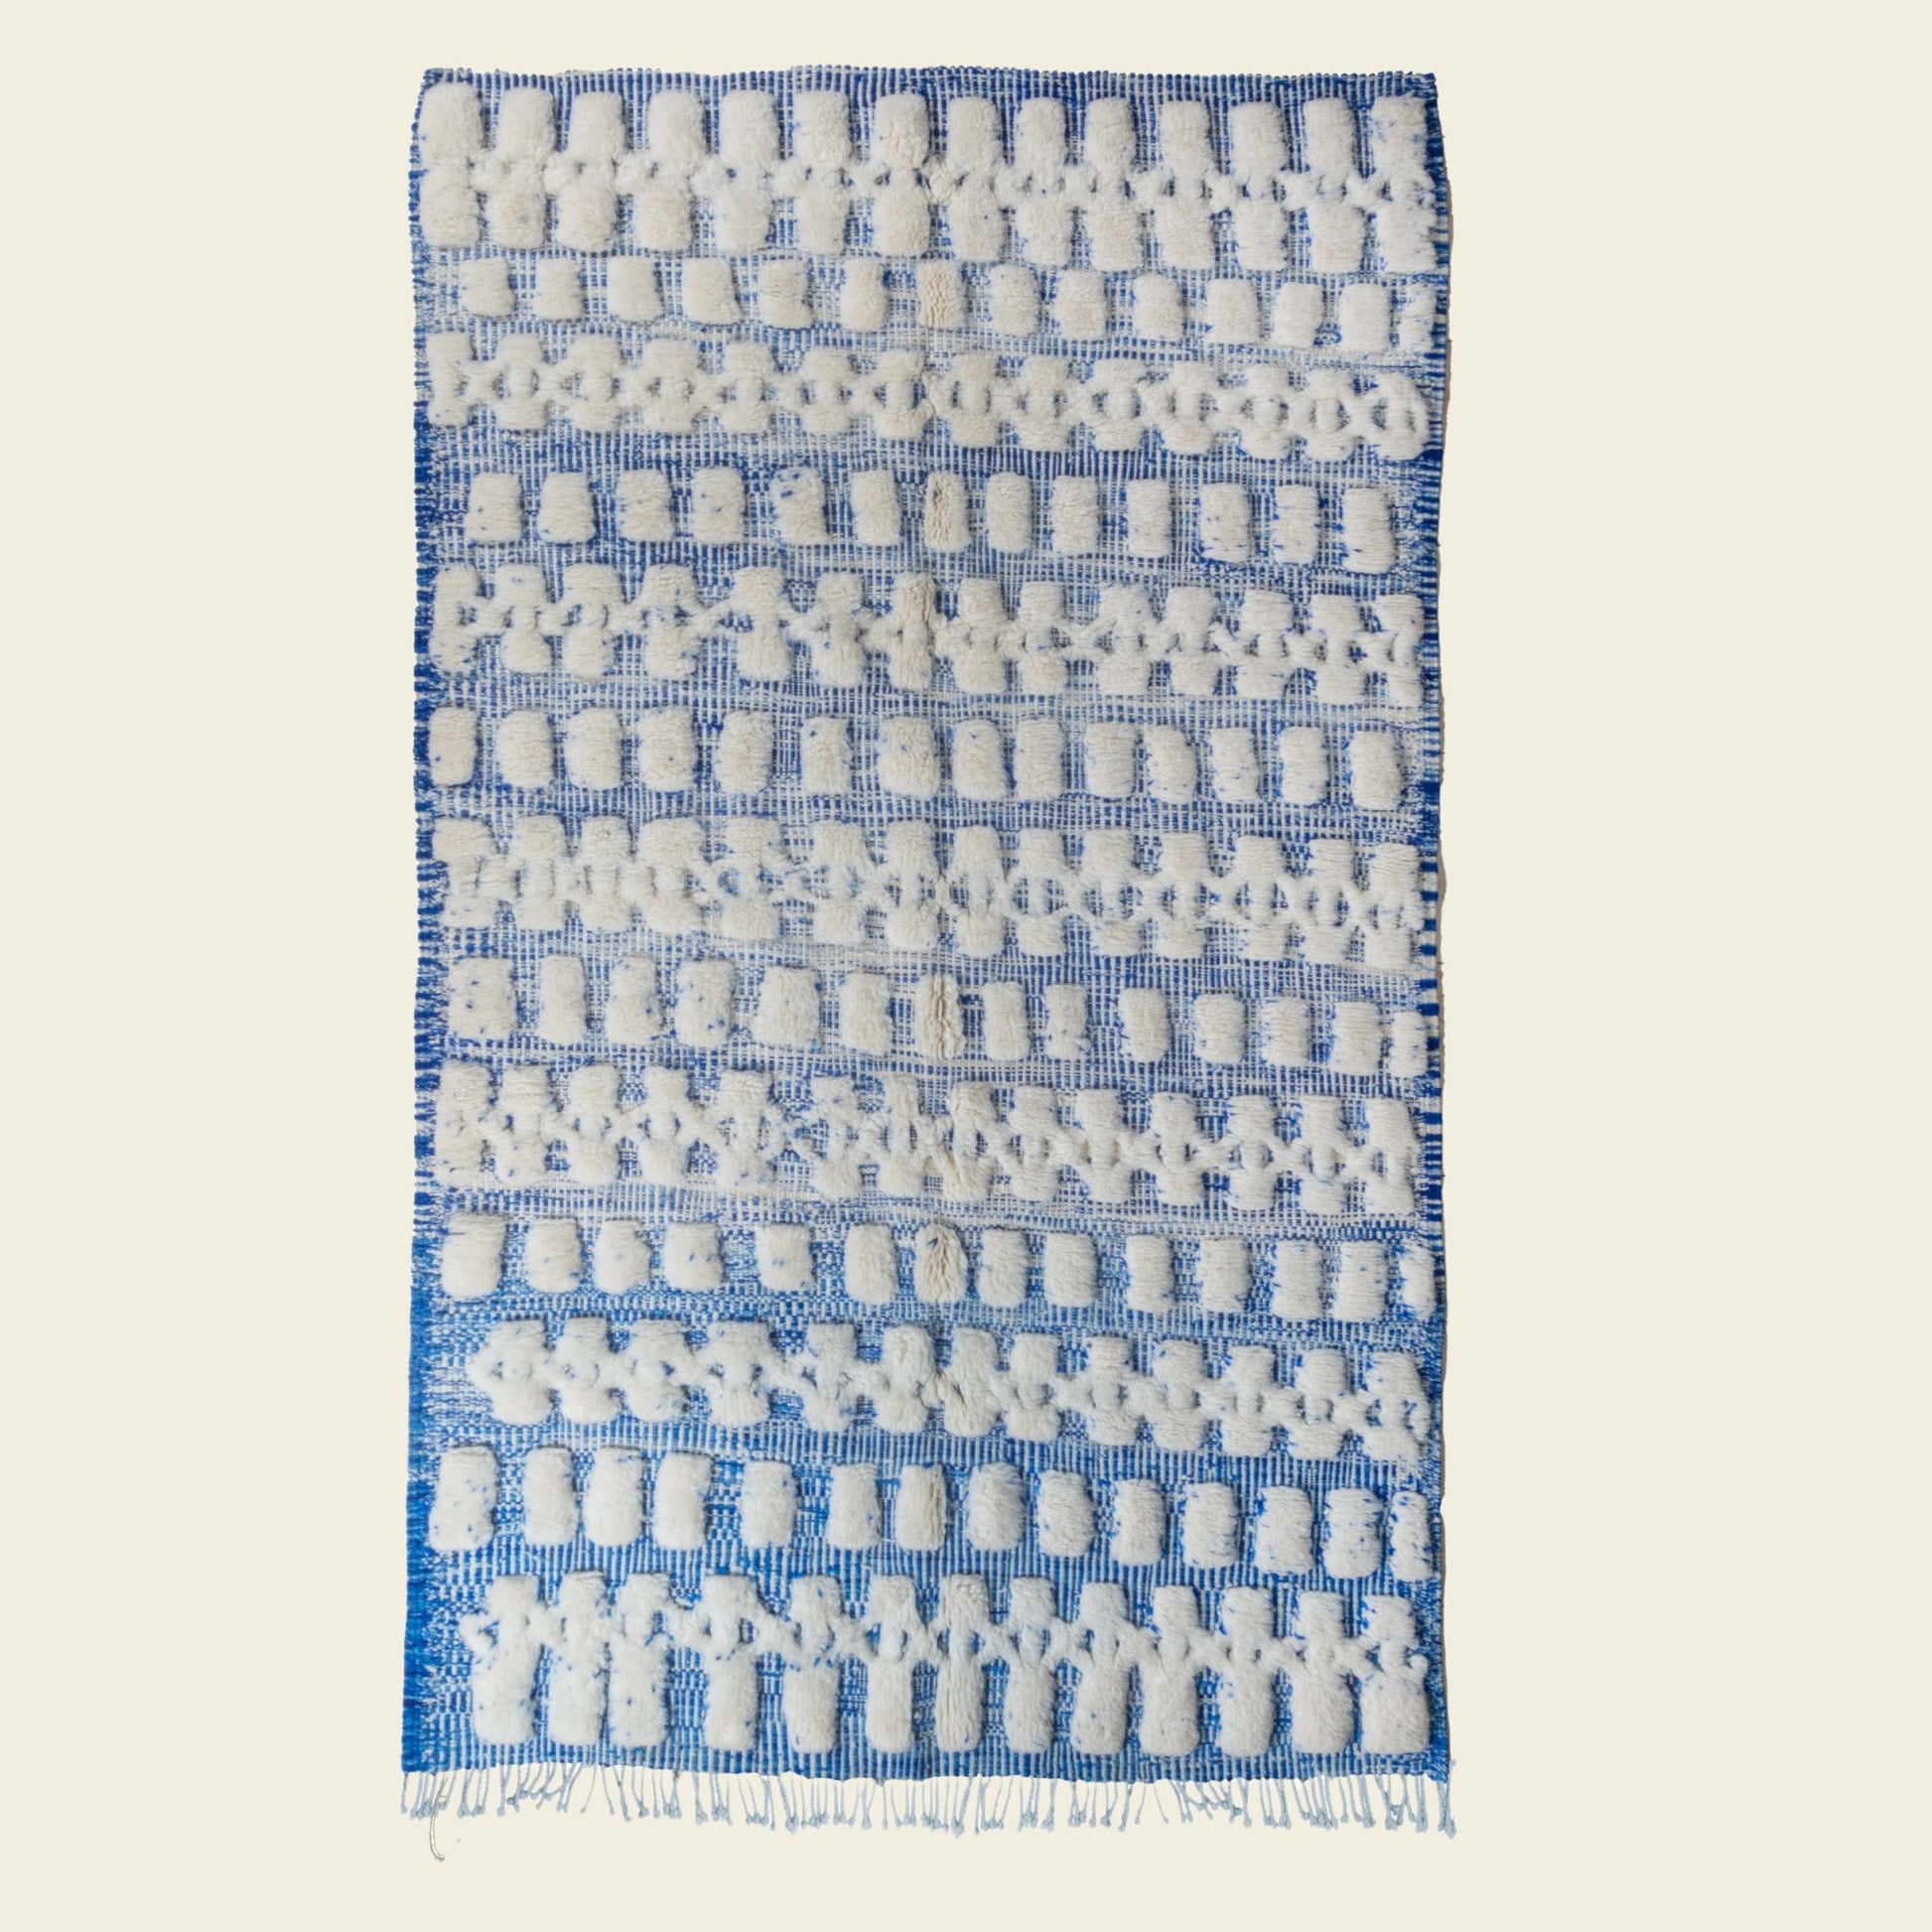 Contemporary Beni Mrirt Berber Rug 6'33" x 10'49" - 193 cm x 320 cm (Wool) - Dar Bouchaib Marrakech